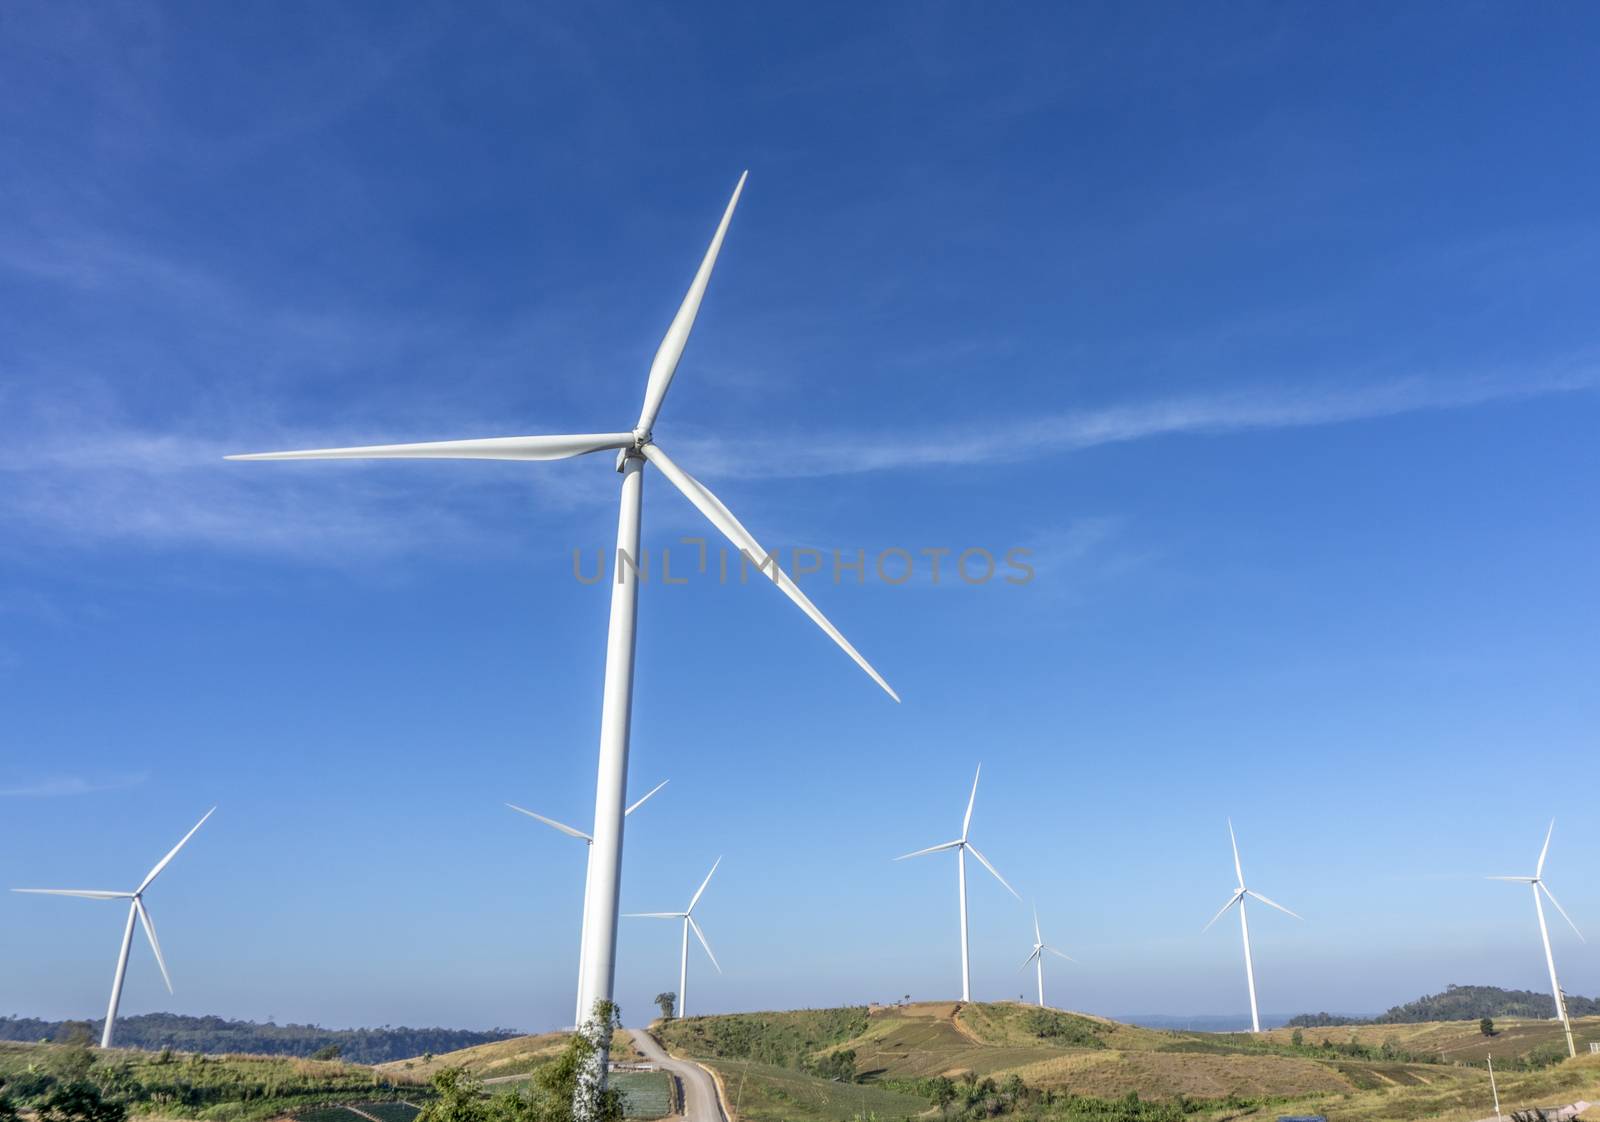 Wind turbines. Wind power generators. Alternative energy, reduce